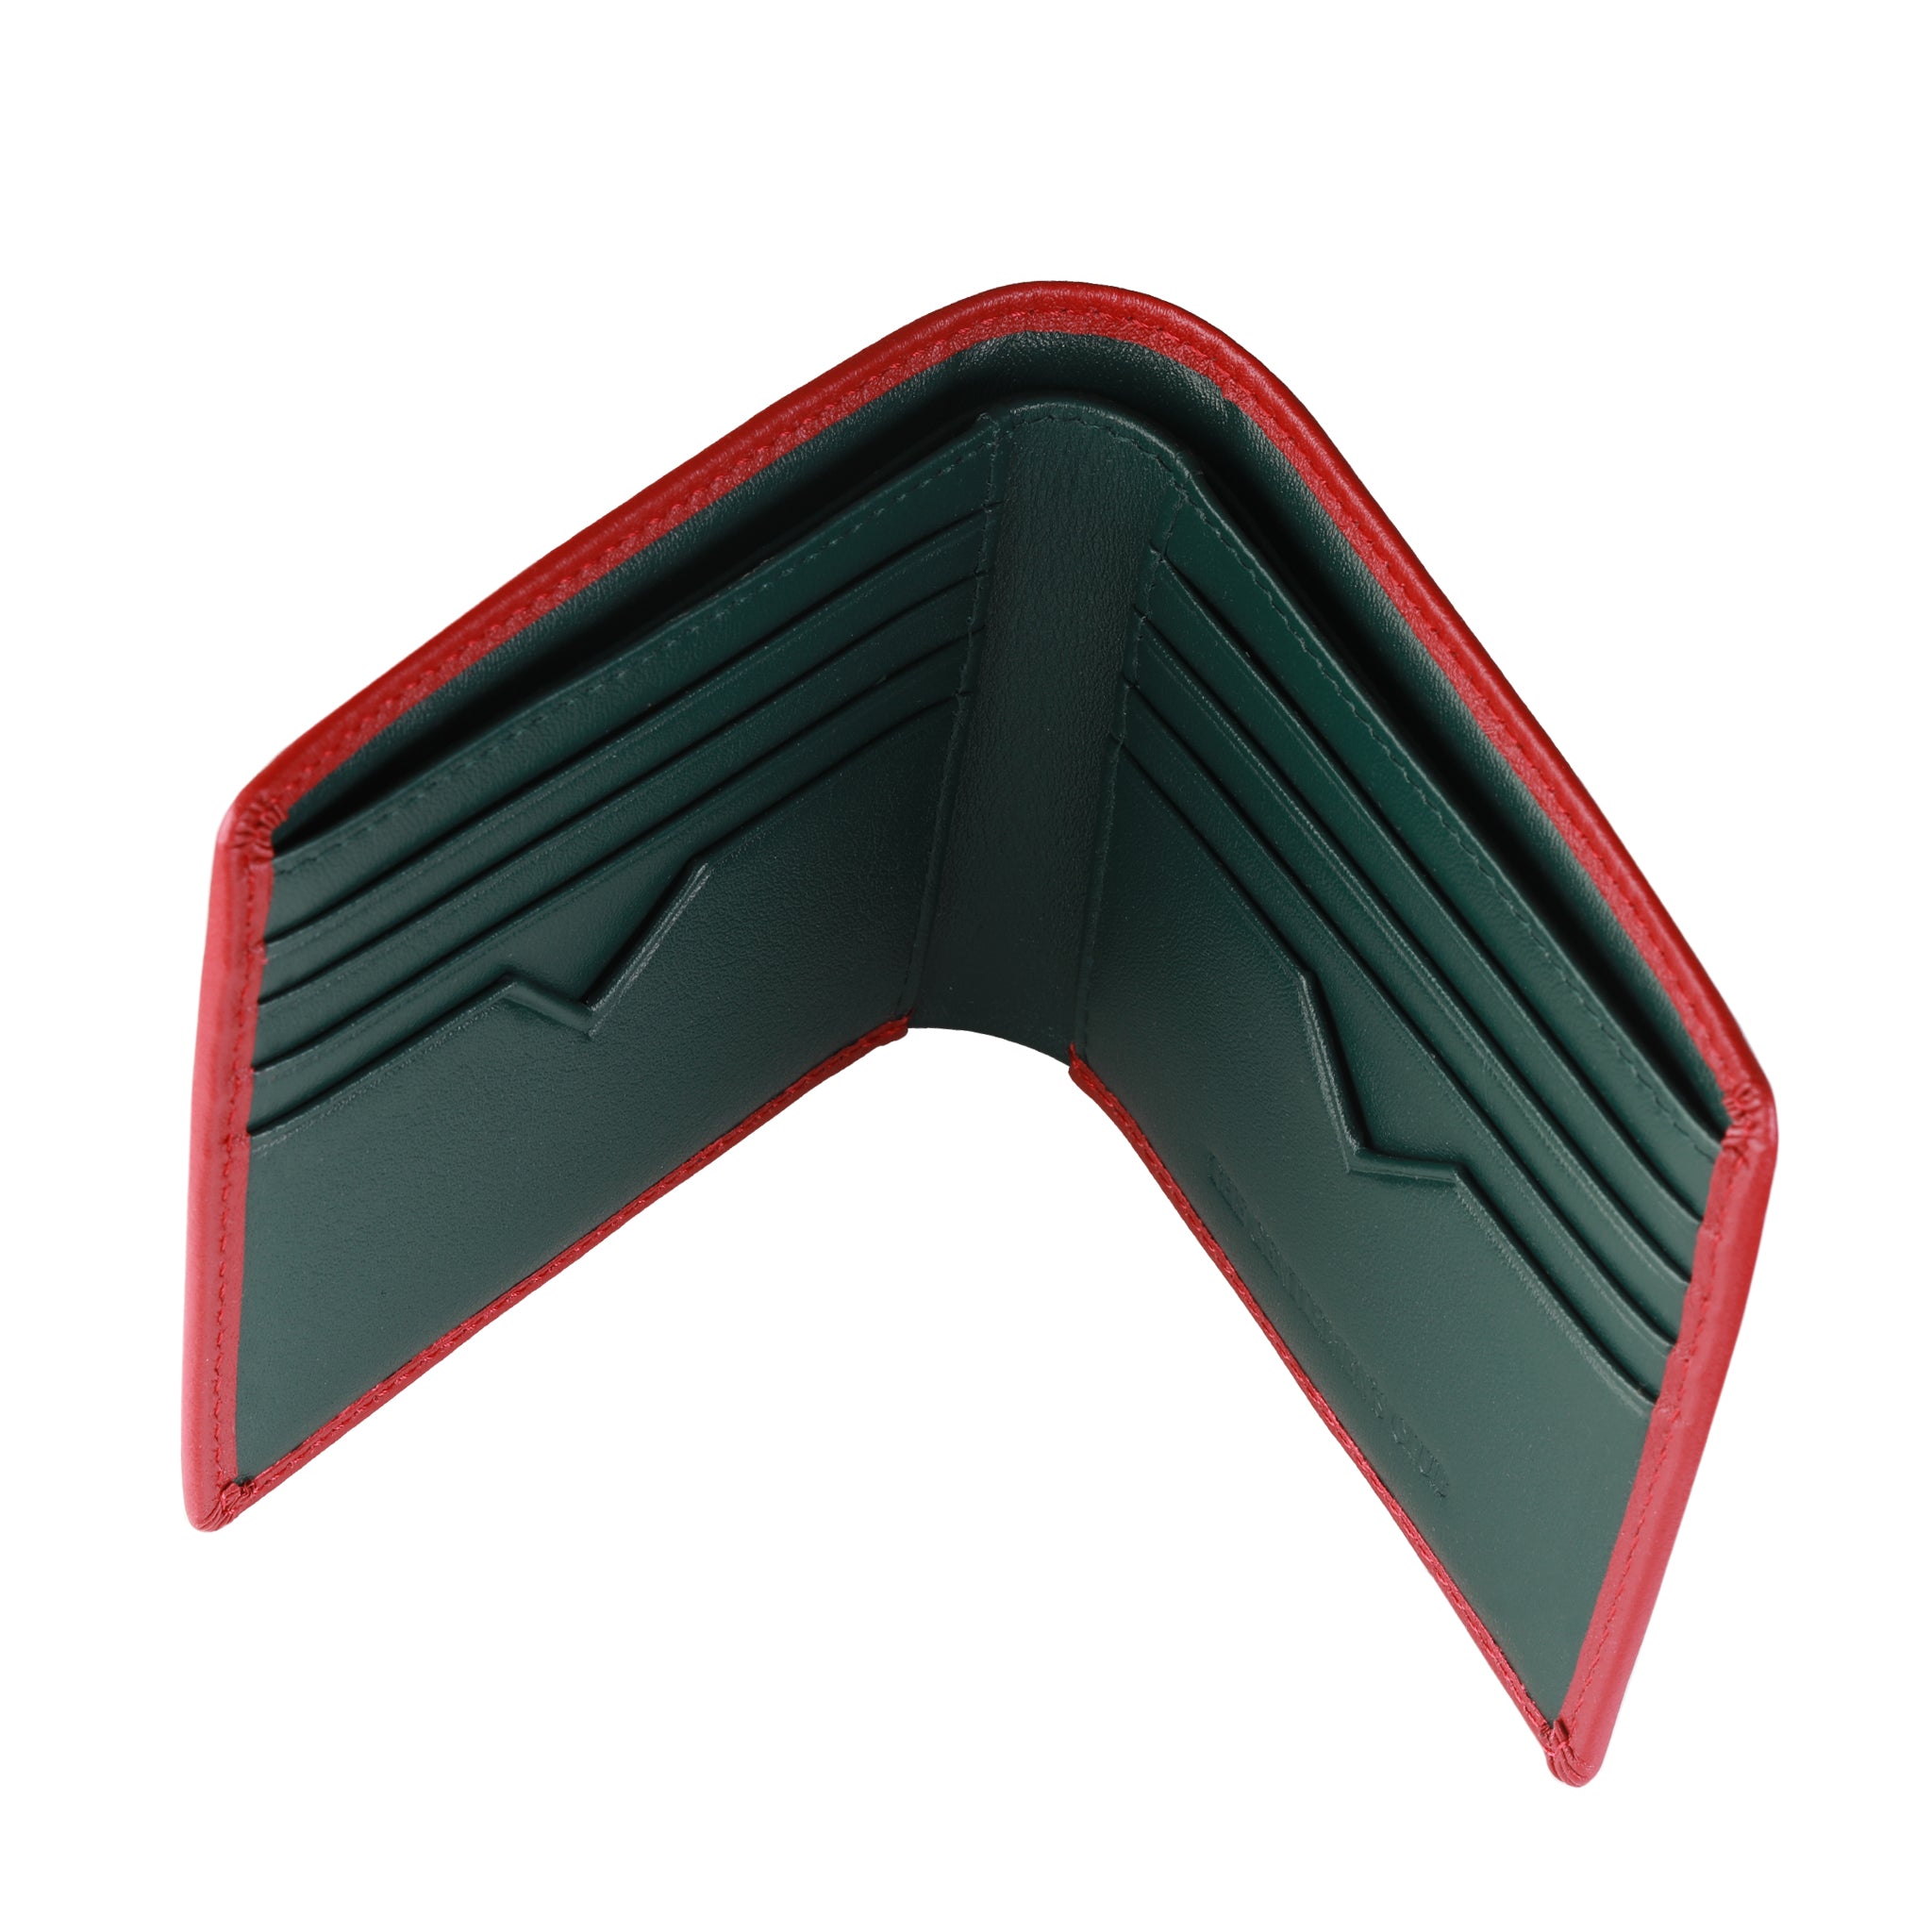 Red & Green Full-Grain Leather Billfold Wallet